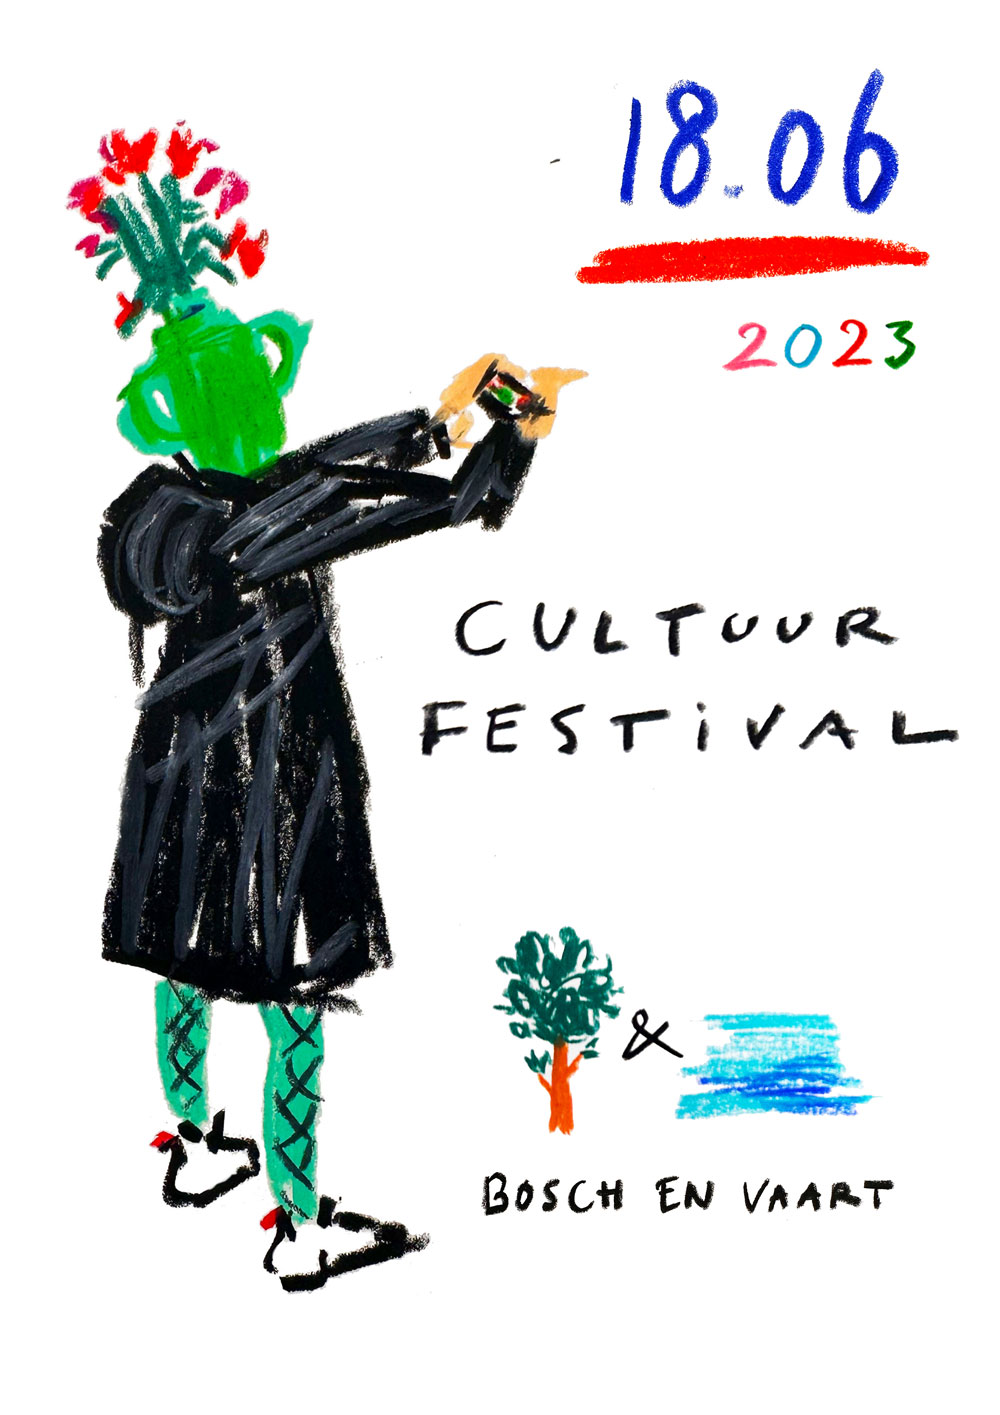 Programma Cultuur Festival bekend!